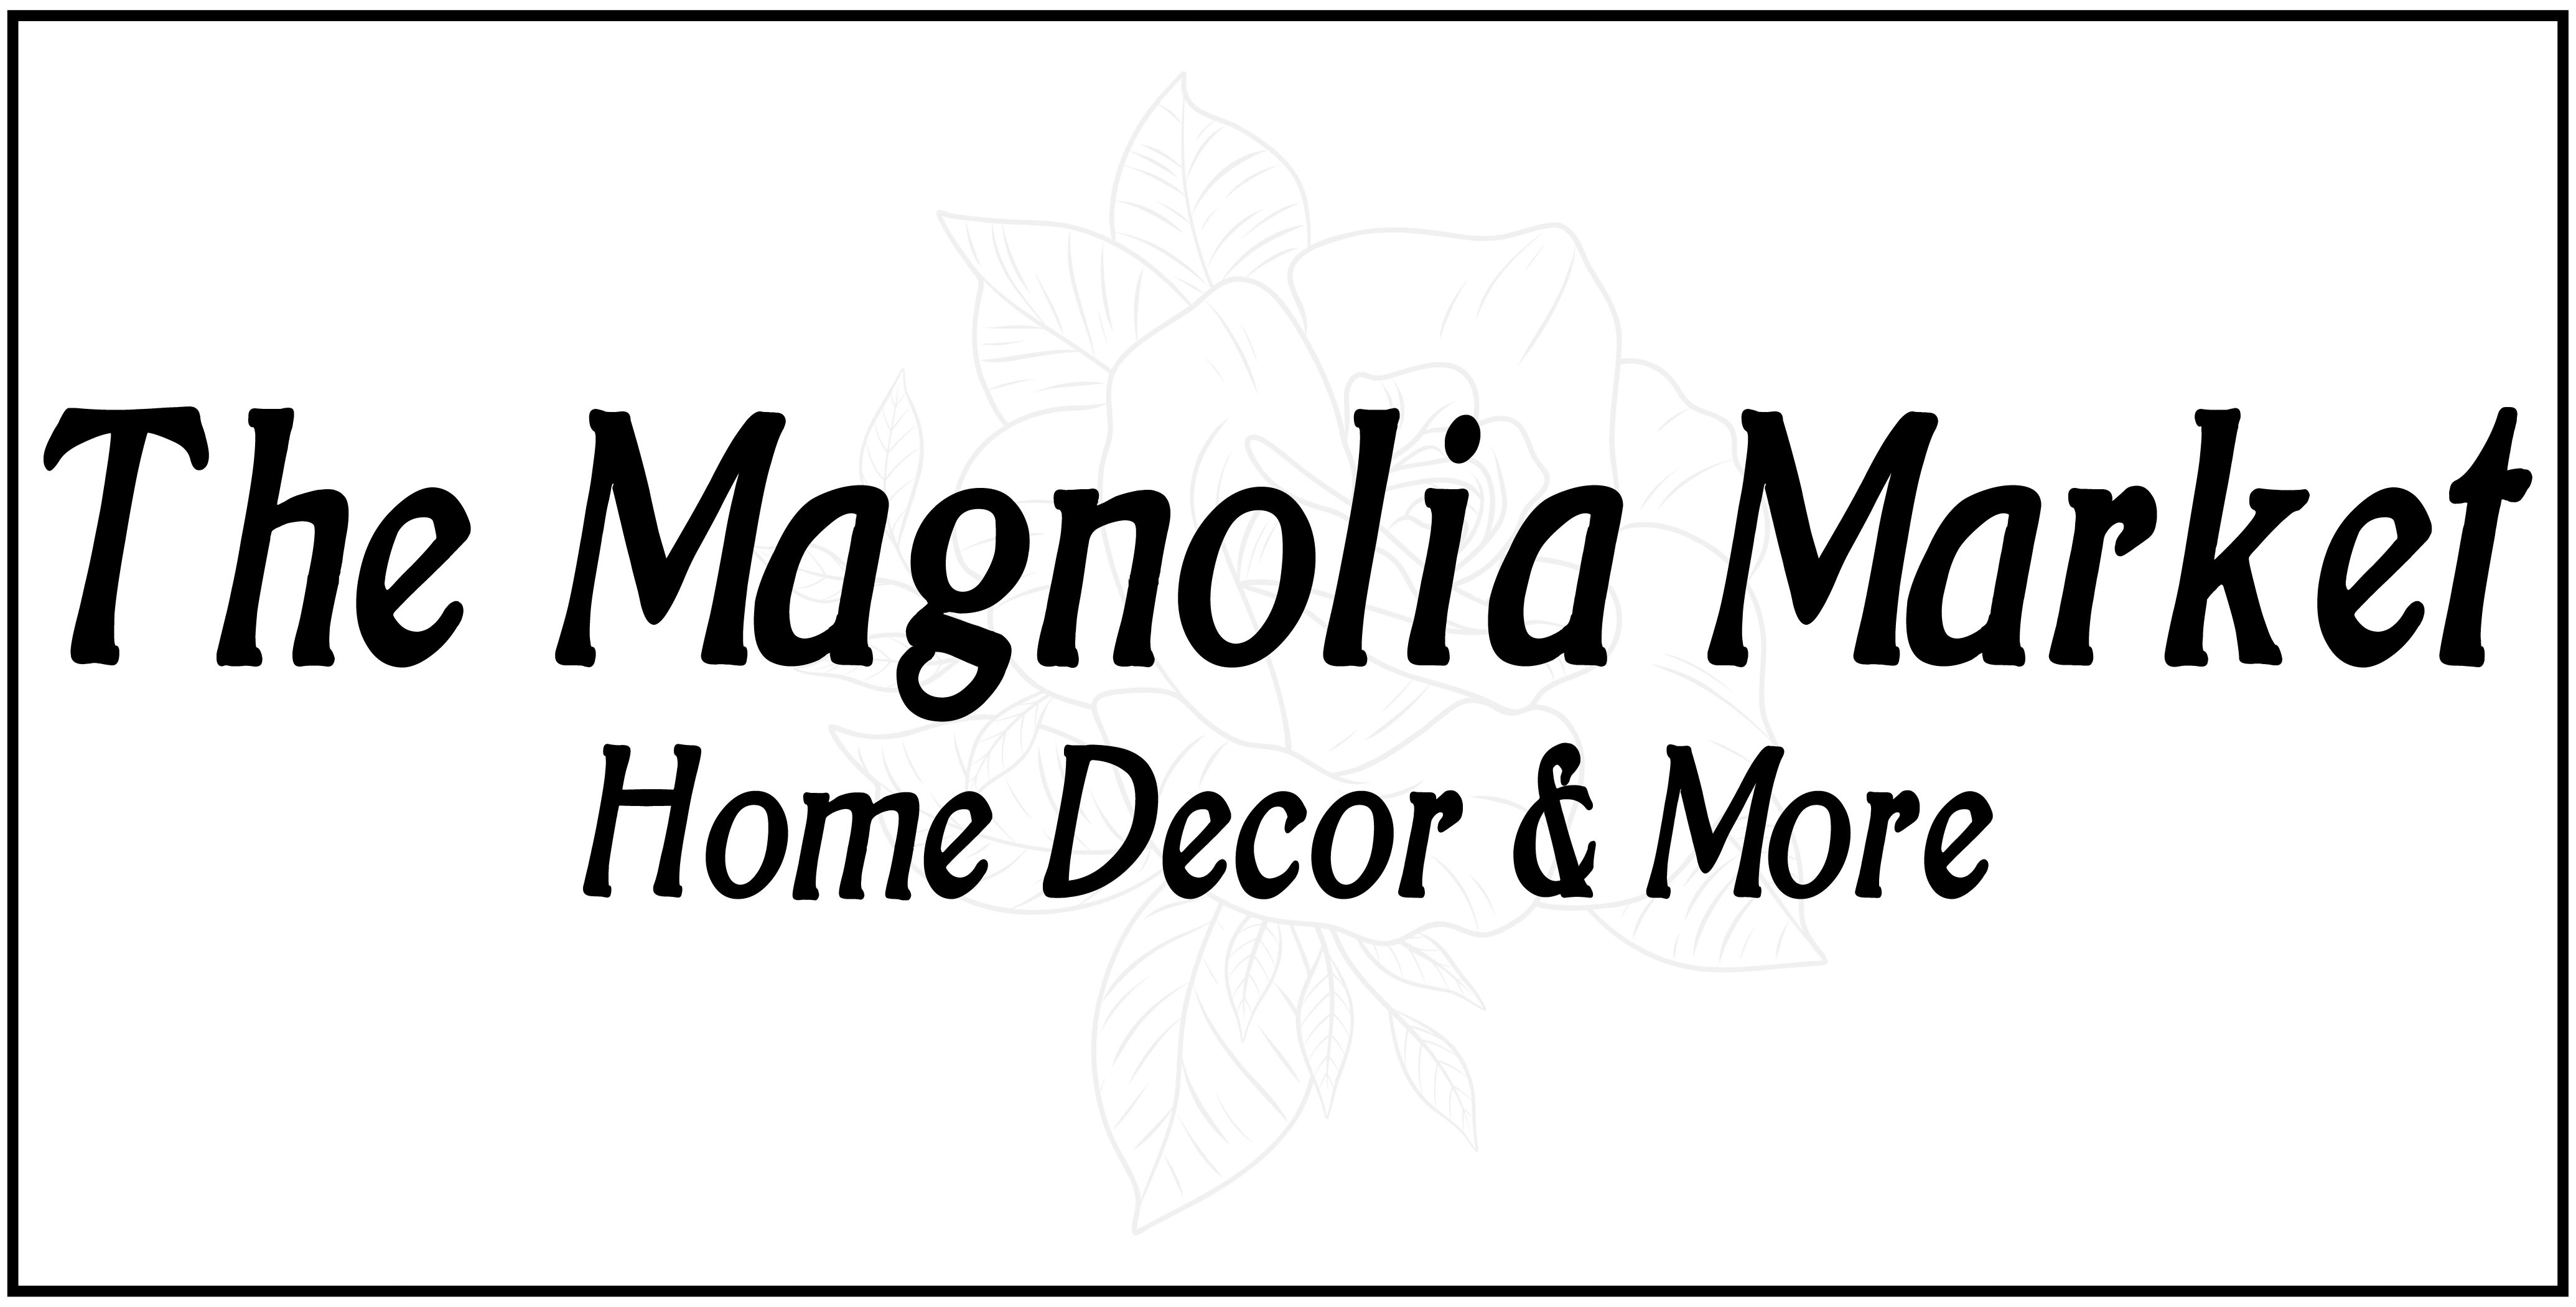 The Magnolia Market logo